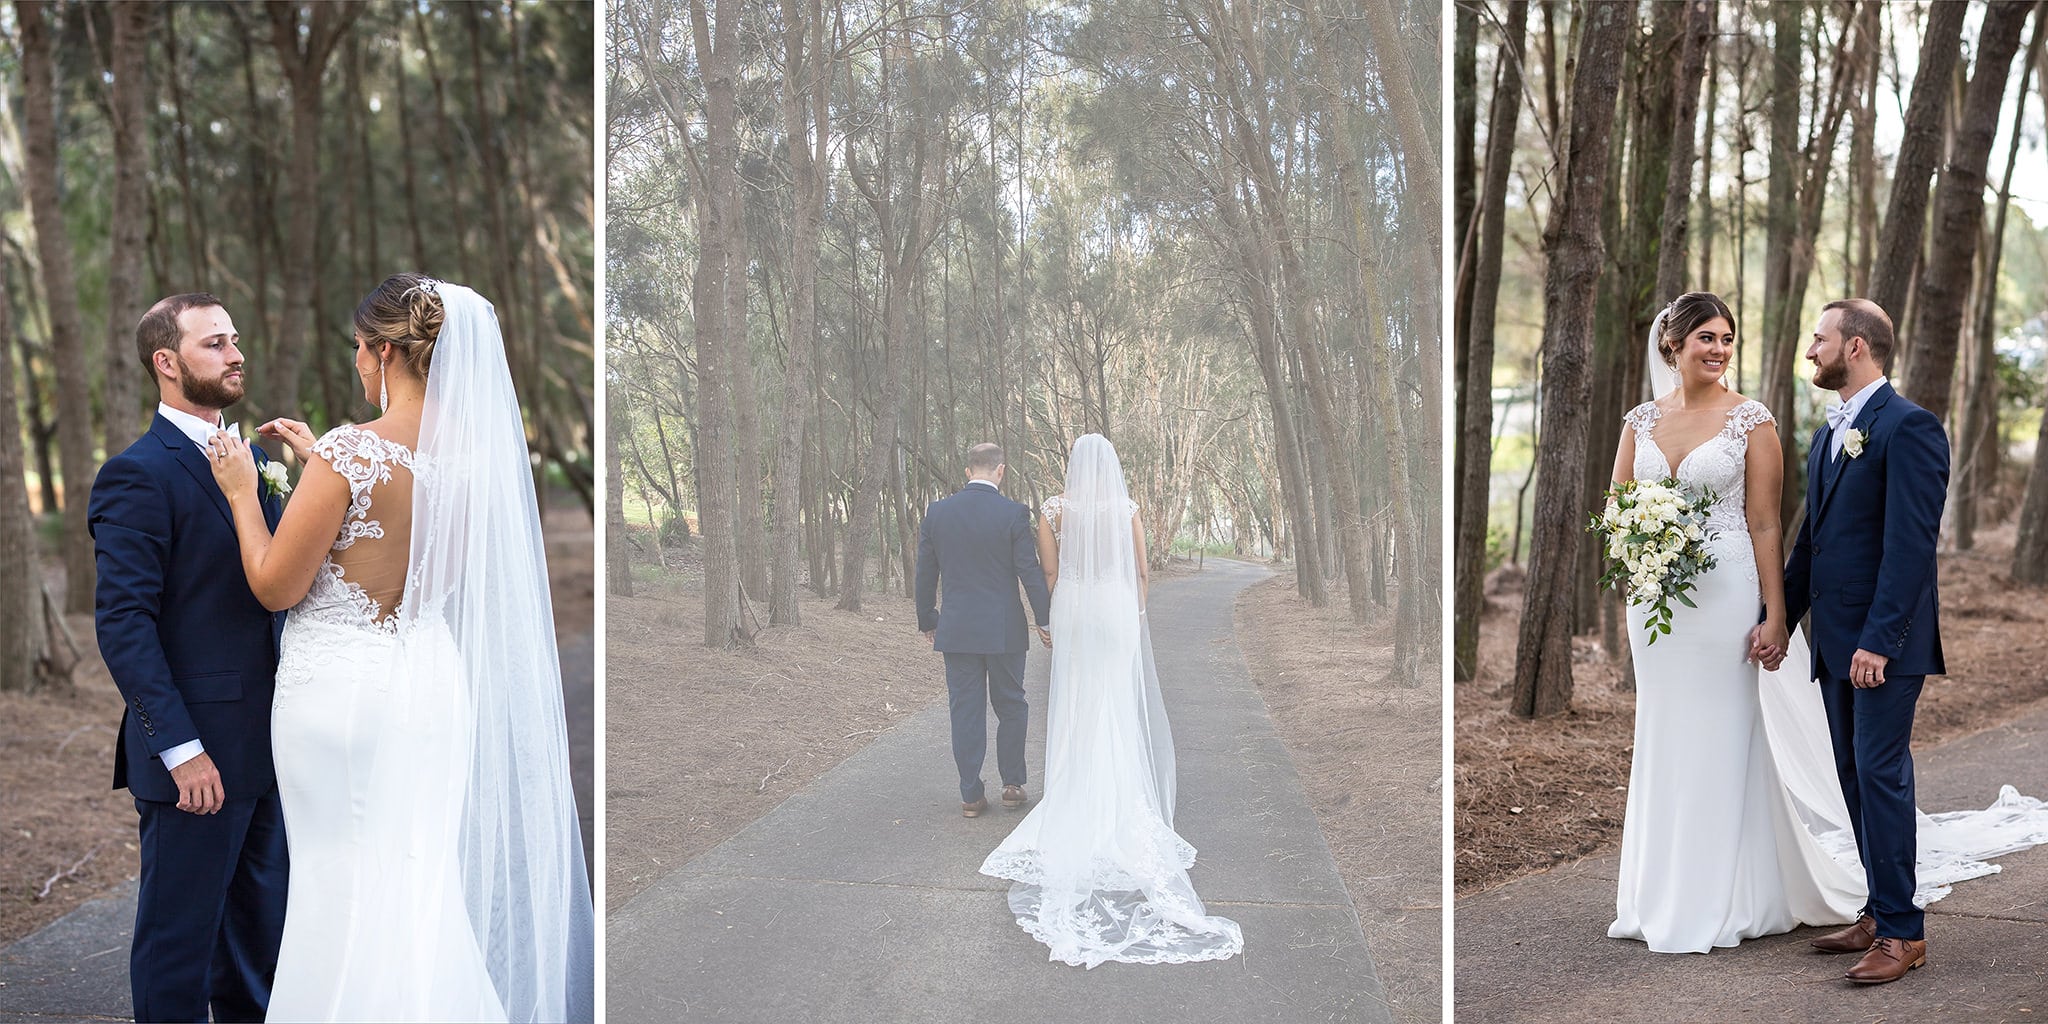 Wedding day sample album by Mooi Photography, a gold coast based wedding photographer.